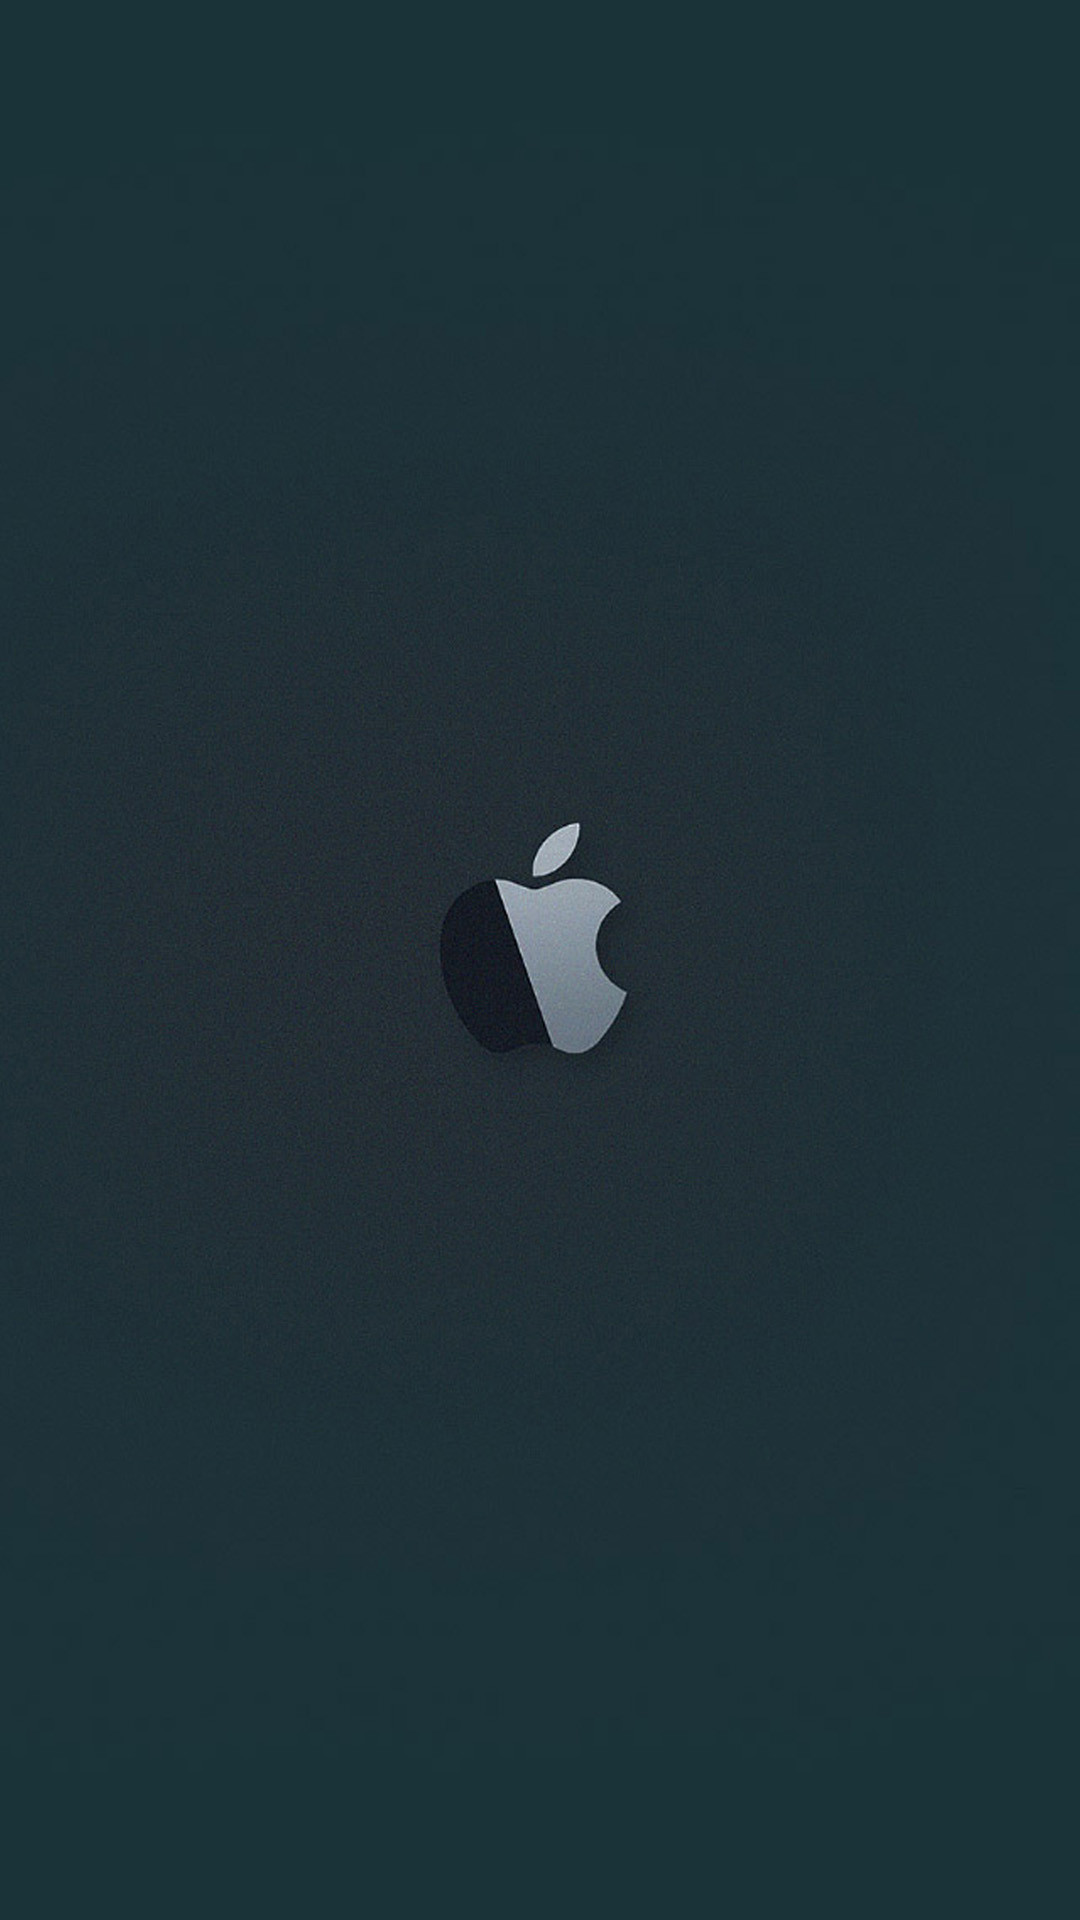 1080x1920 Apple Shiny Black Rear HD Wallpaper iPhone 6 plus - wallpapersmobile .